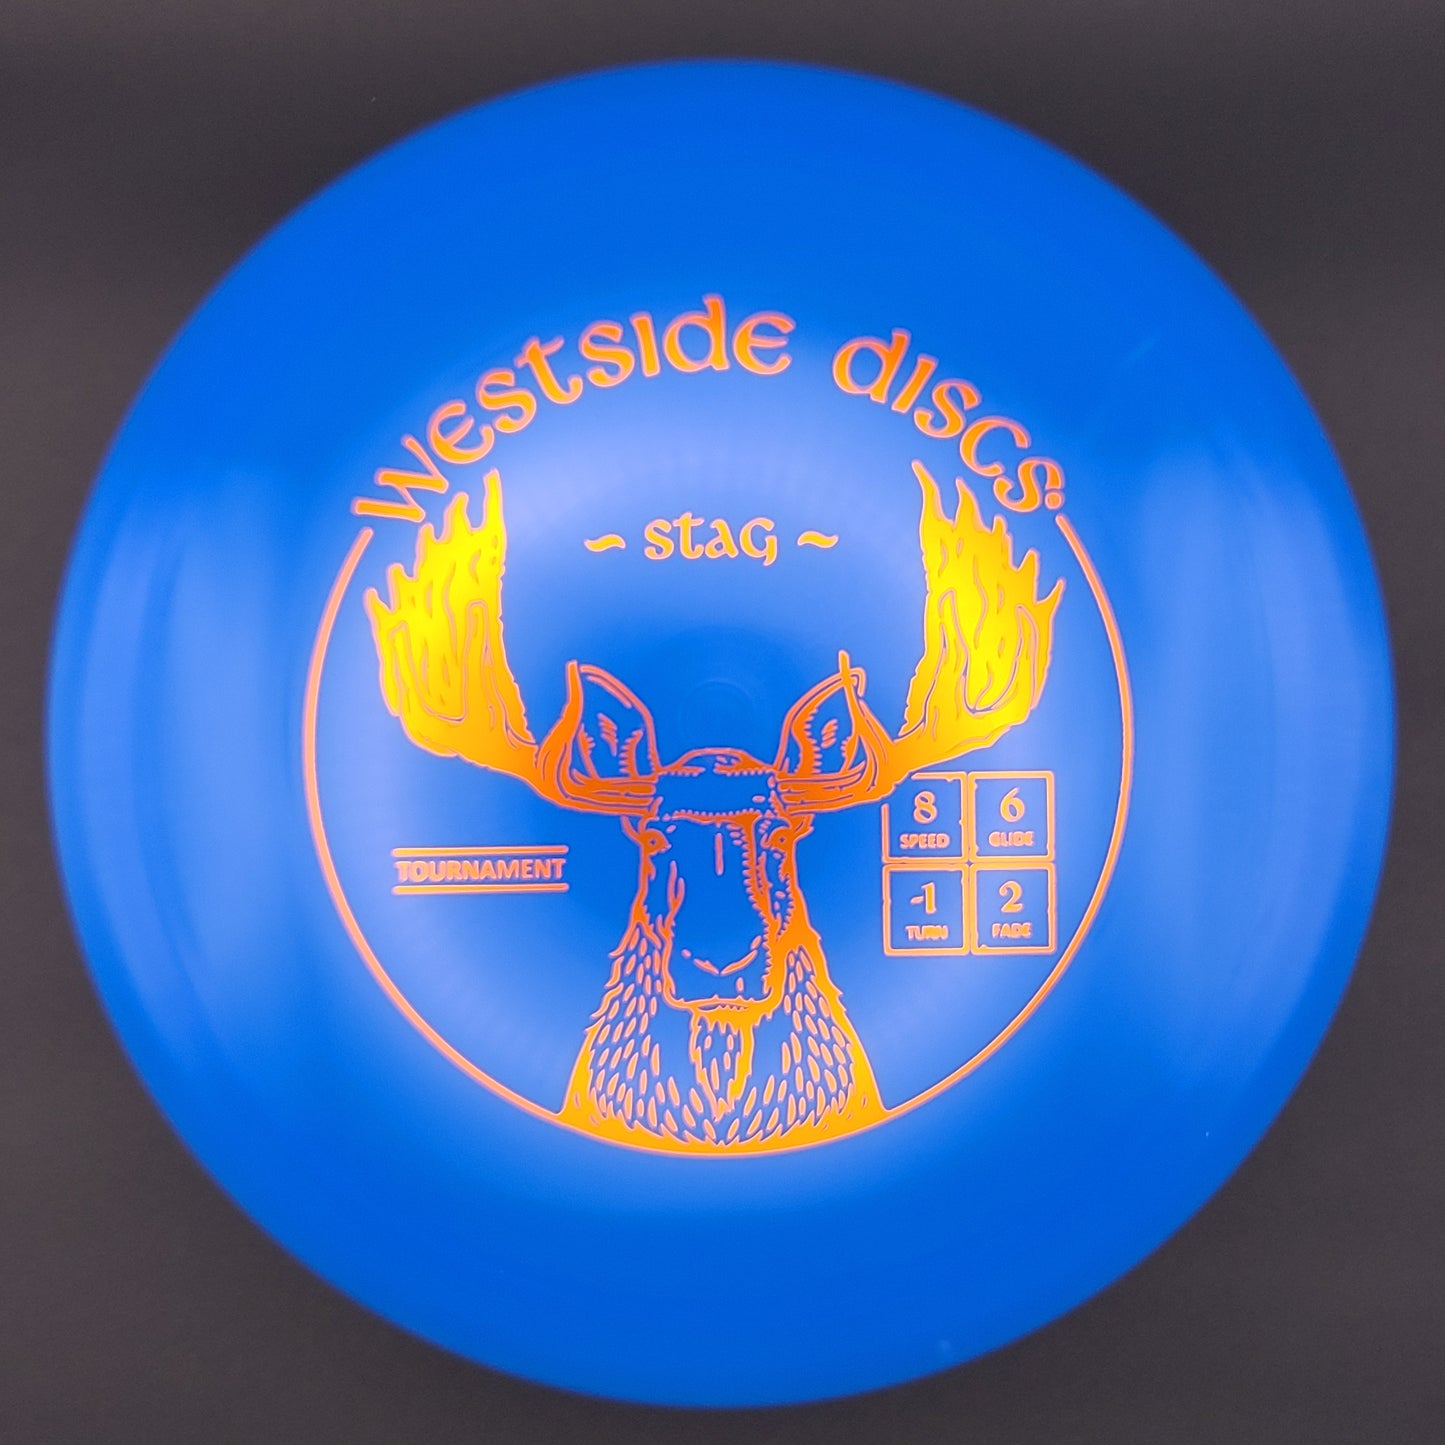 Westside Discs - Stag - Tournament